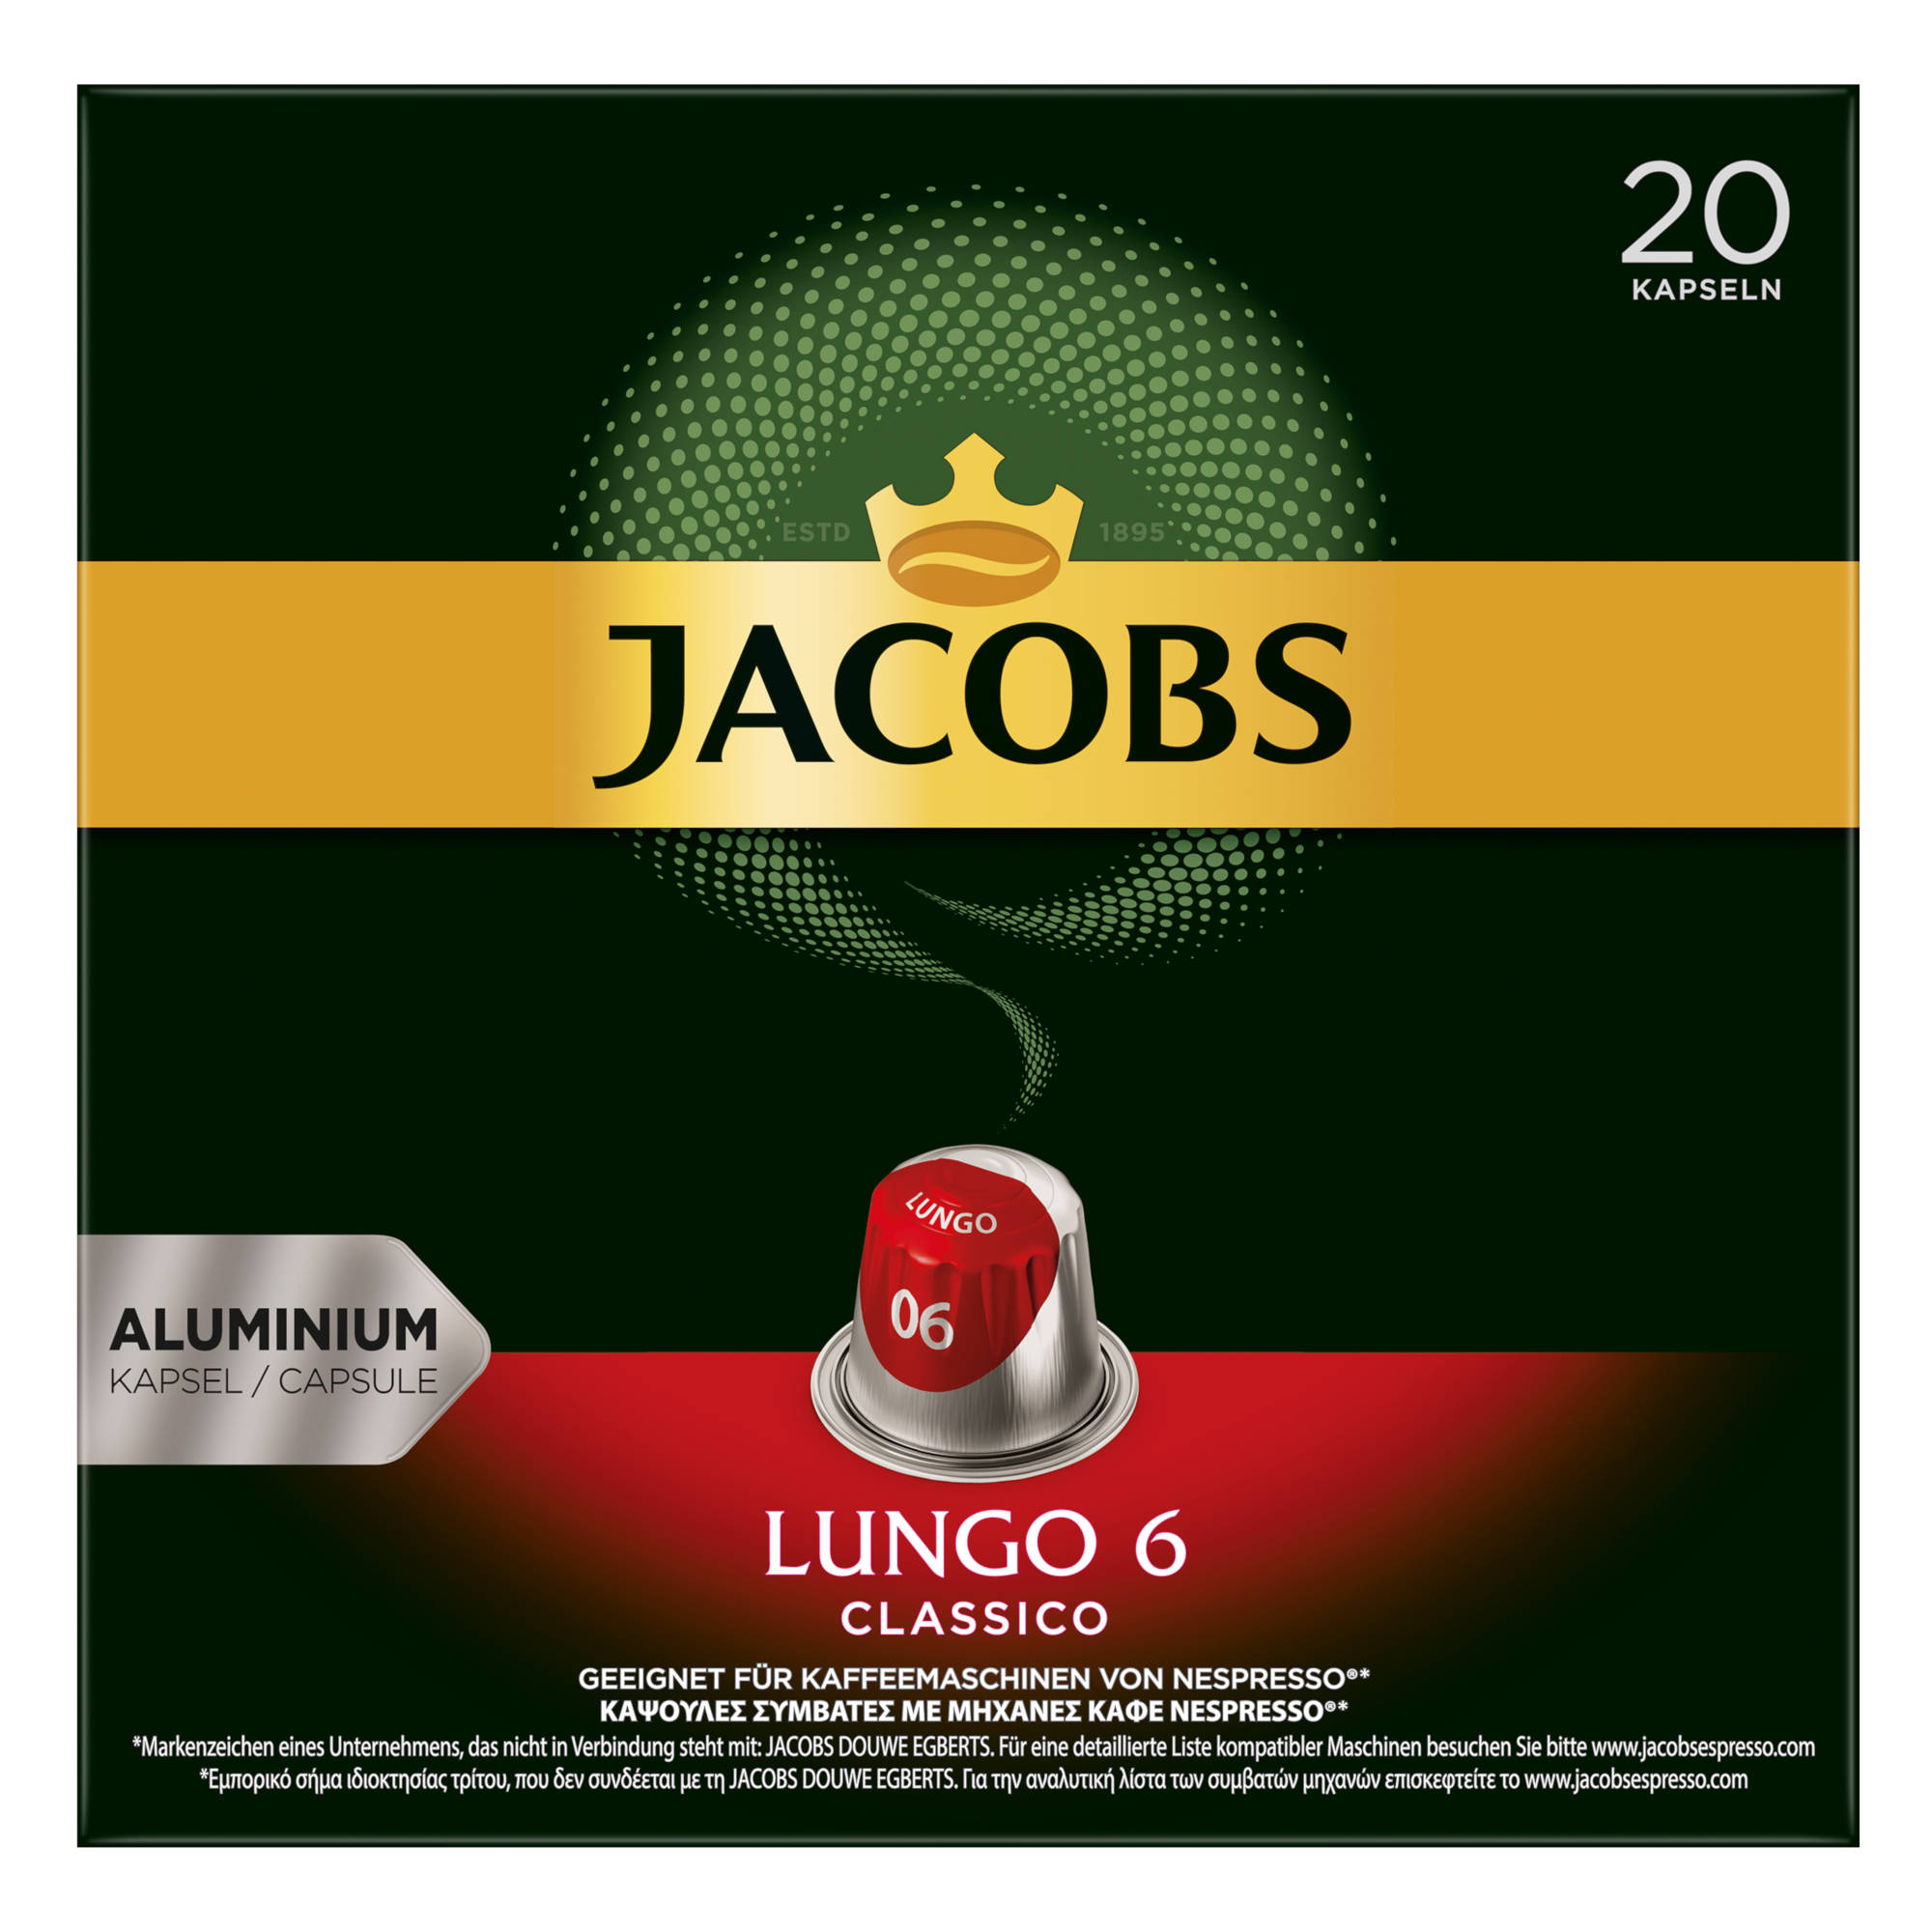 & Lungo Nespresso®* 100 Kaffeekapseln 6 JACOBS (Nespresso System) Classico kompatible je Balance